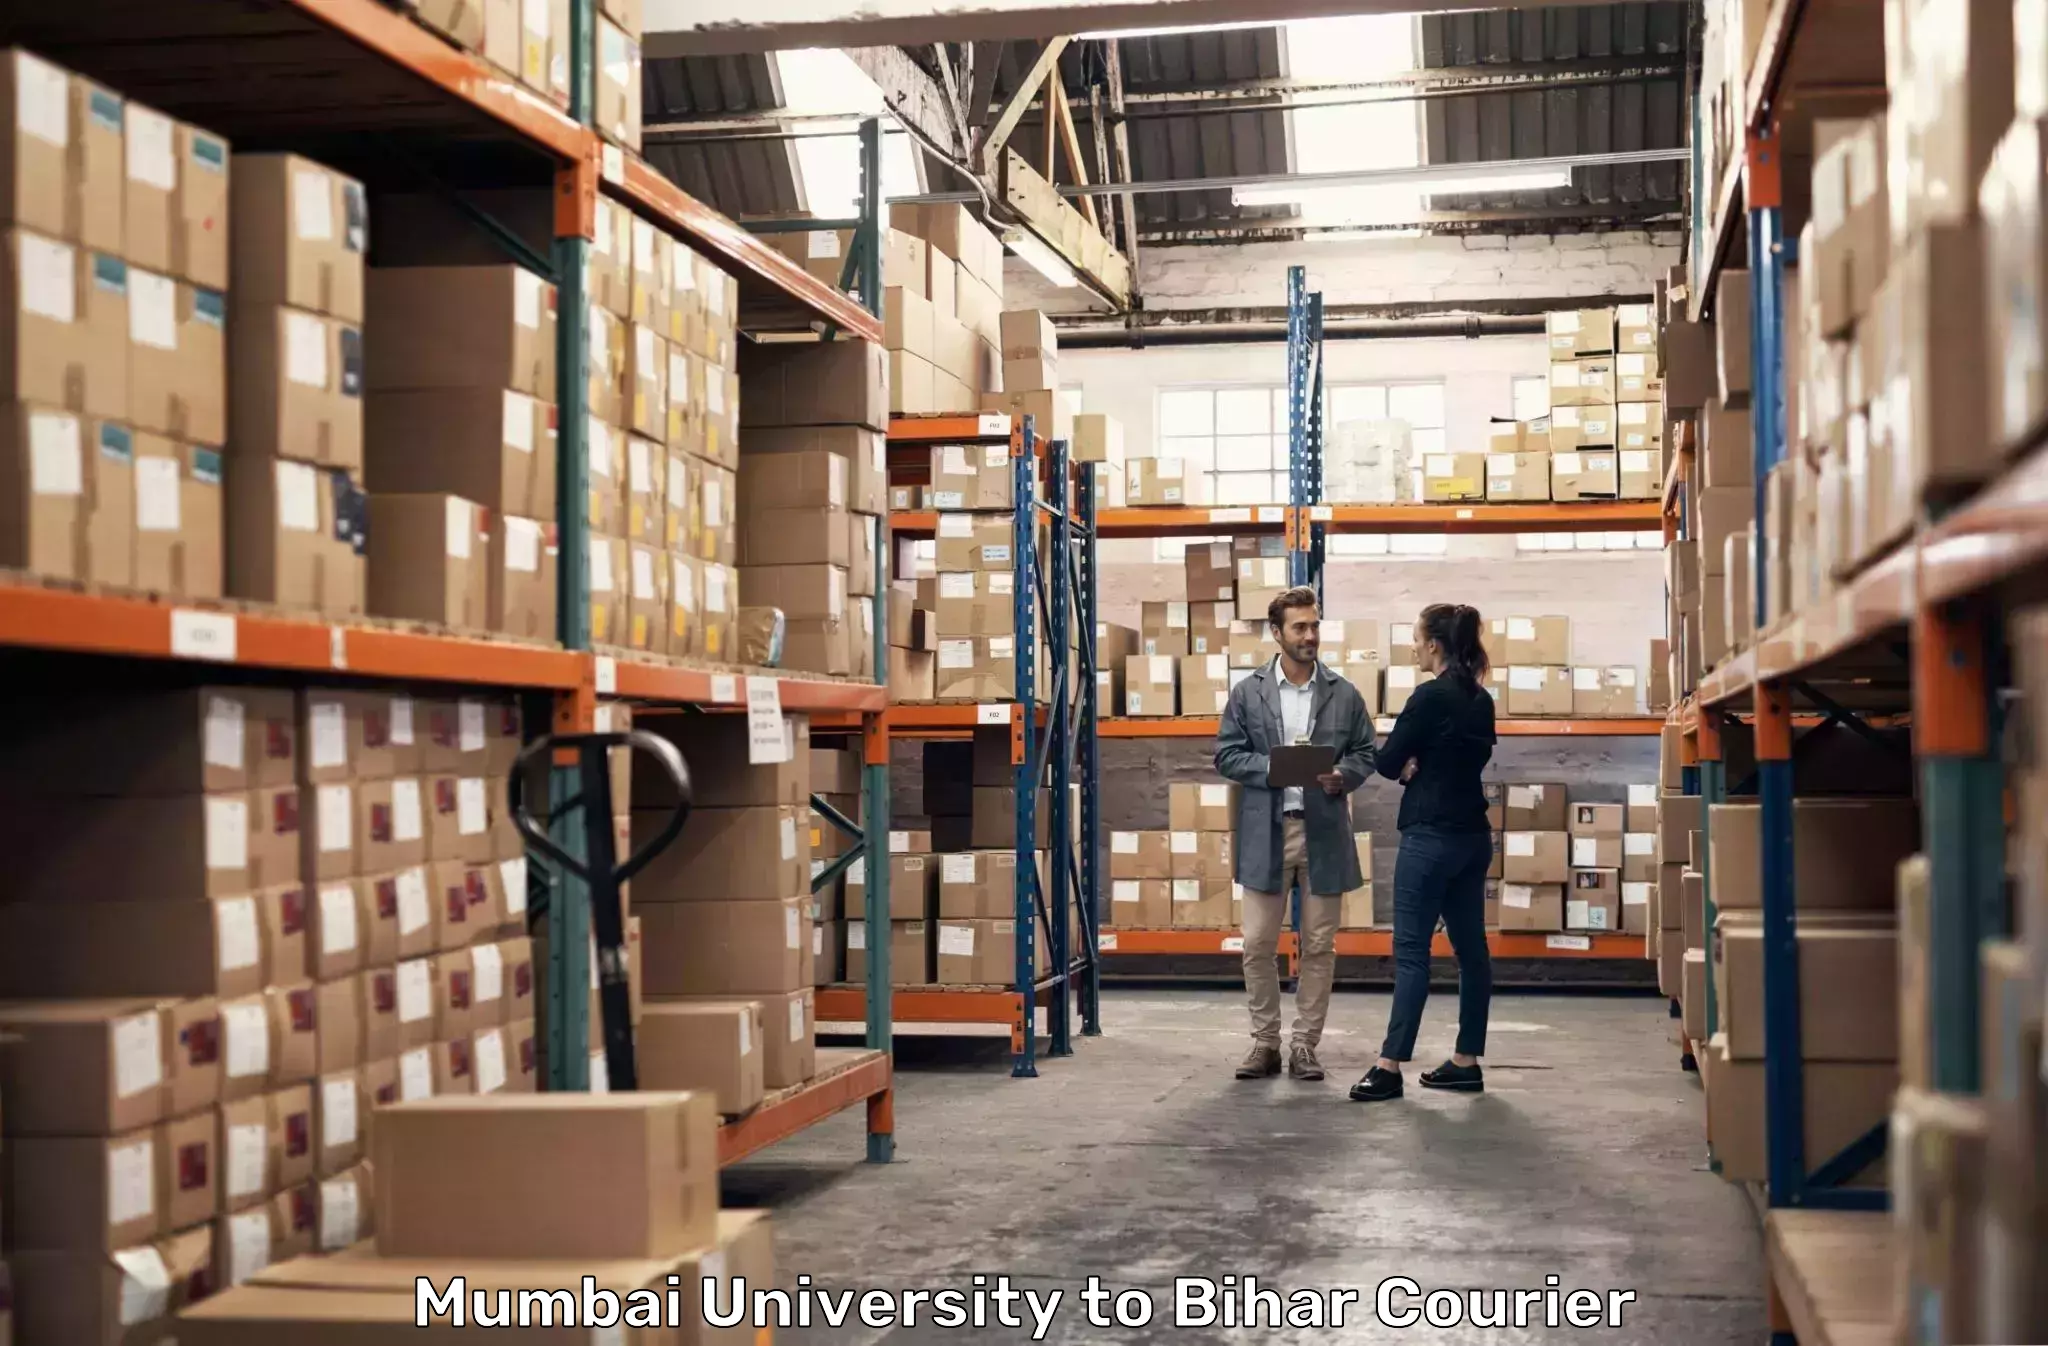 Express logistics providers Mumbai University to Aurangabad Bihar